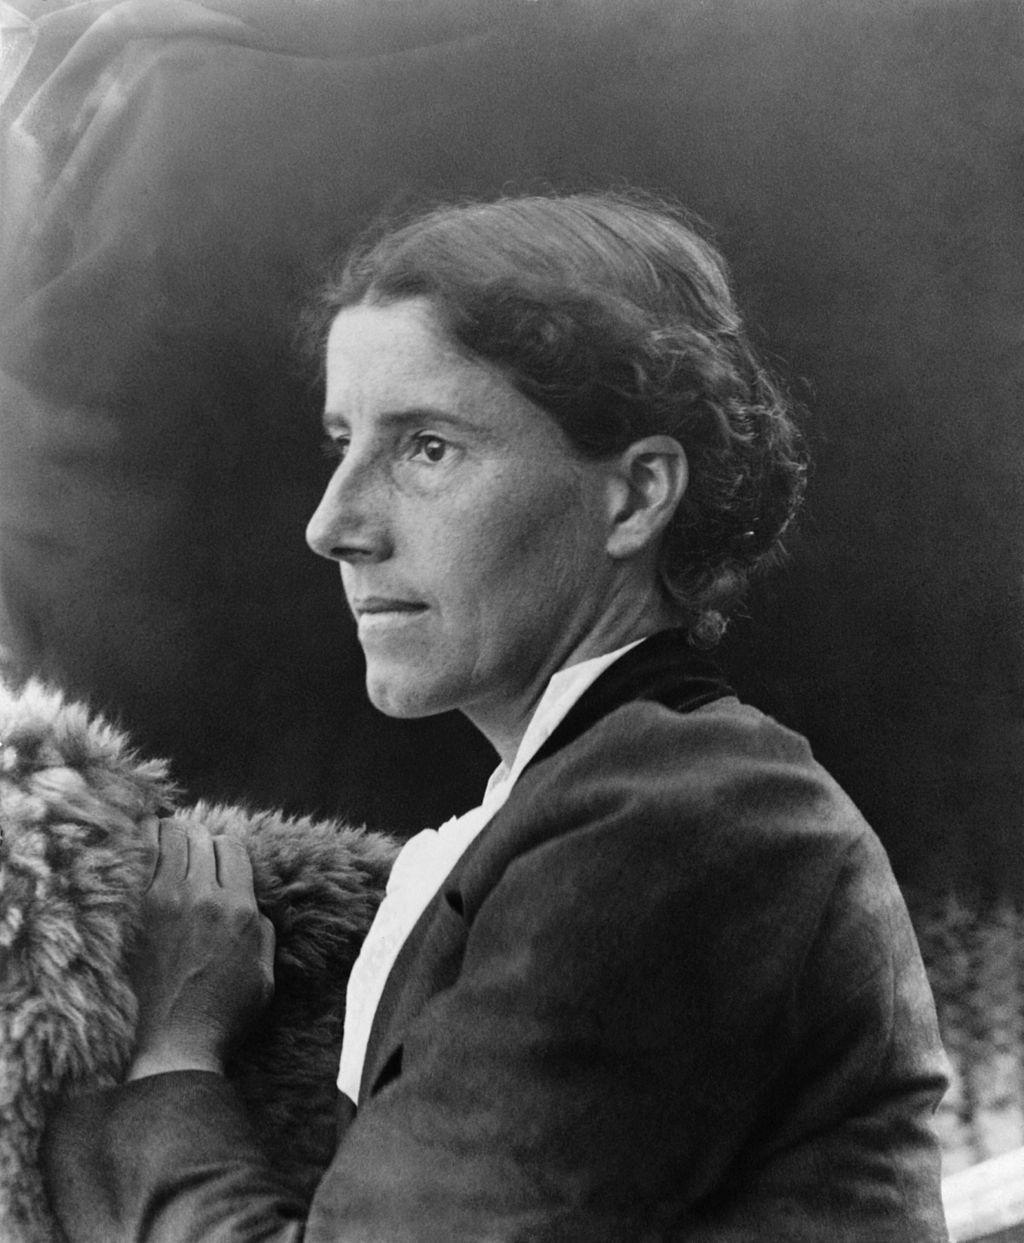 Photographic portrait of Charlotte Perkins Gilman, American author, c. 1900.